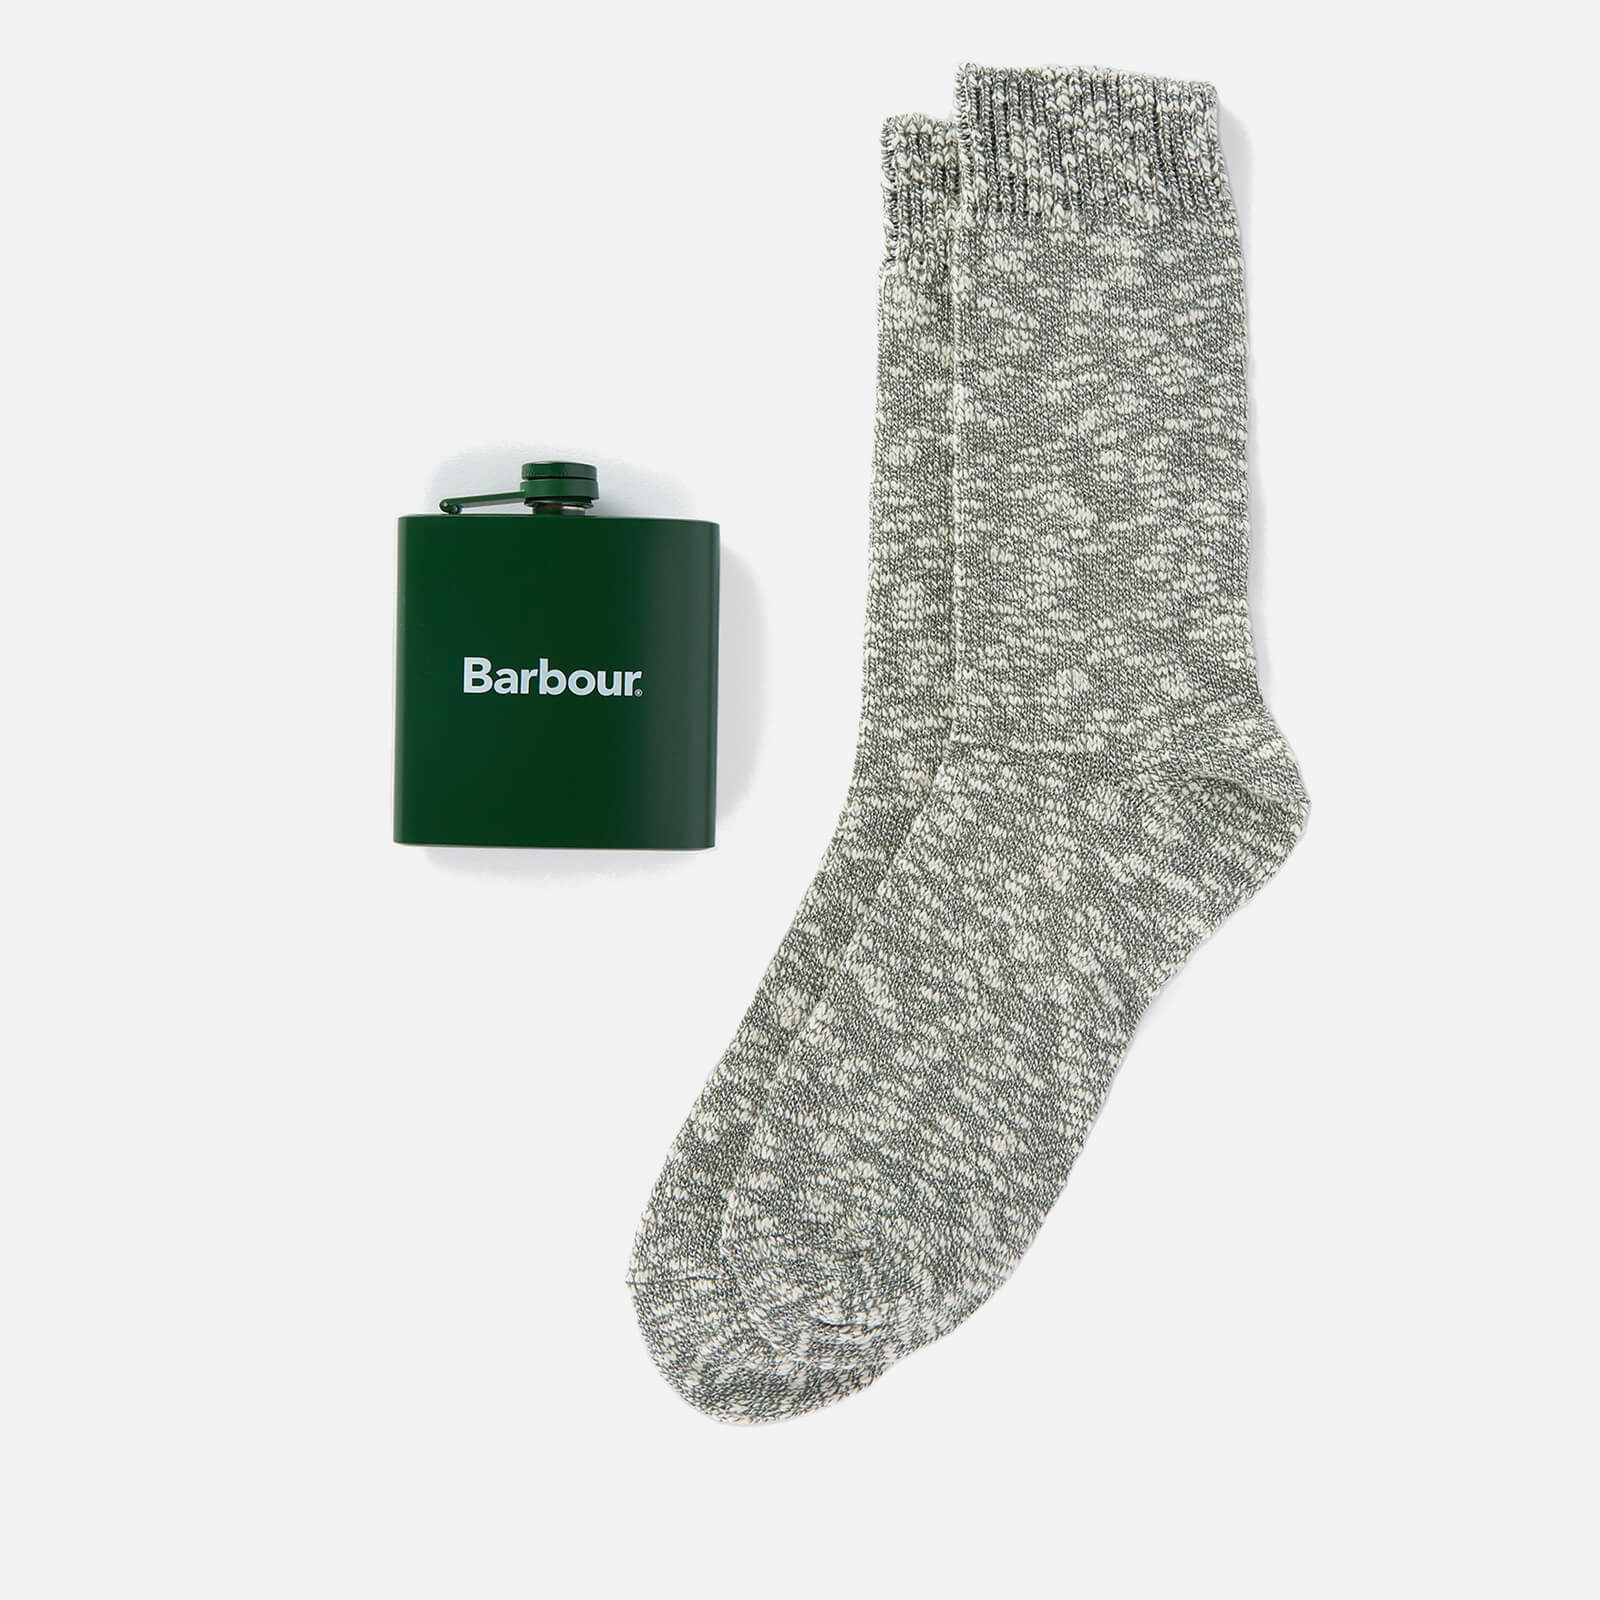 Image of Barbour Hip Flask and Cotton-Blend Socks Set